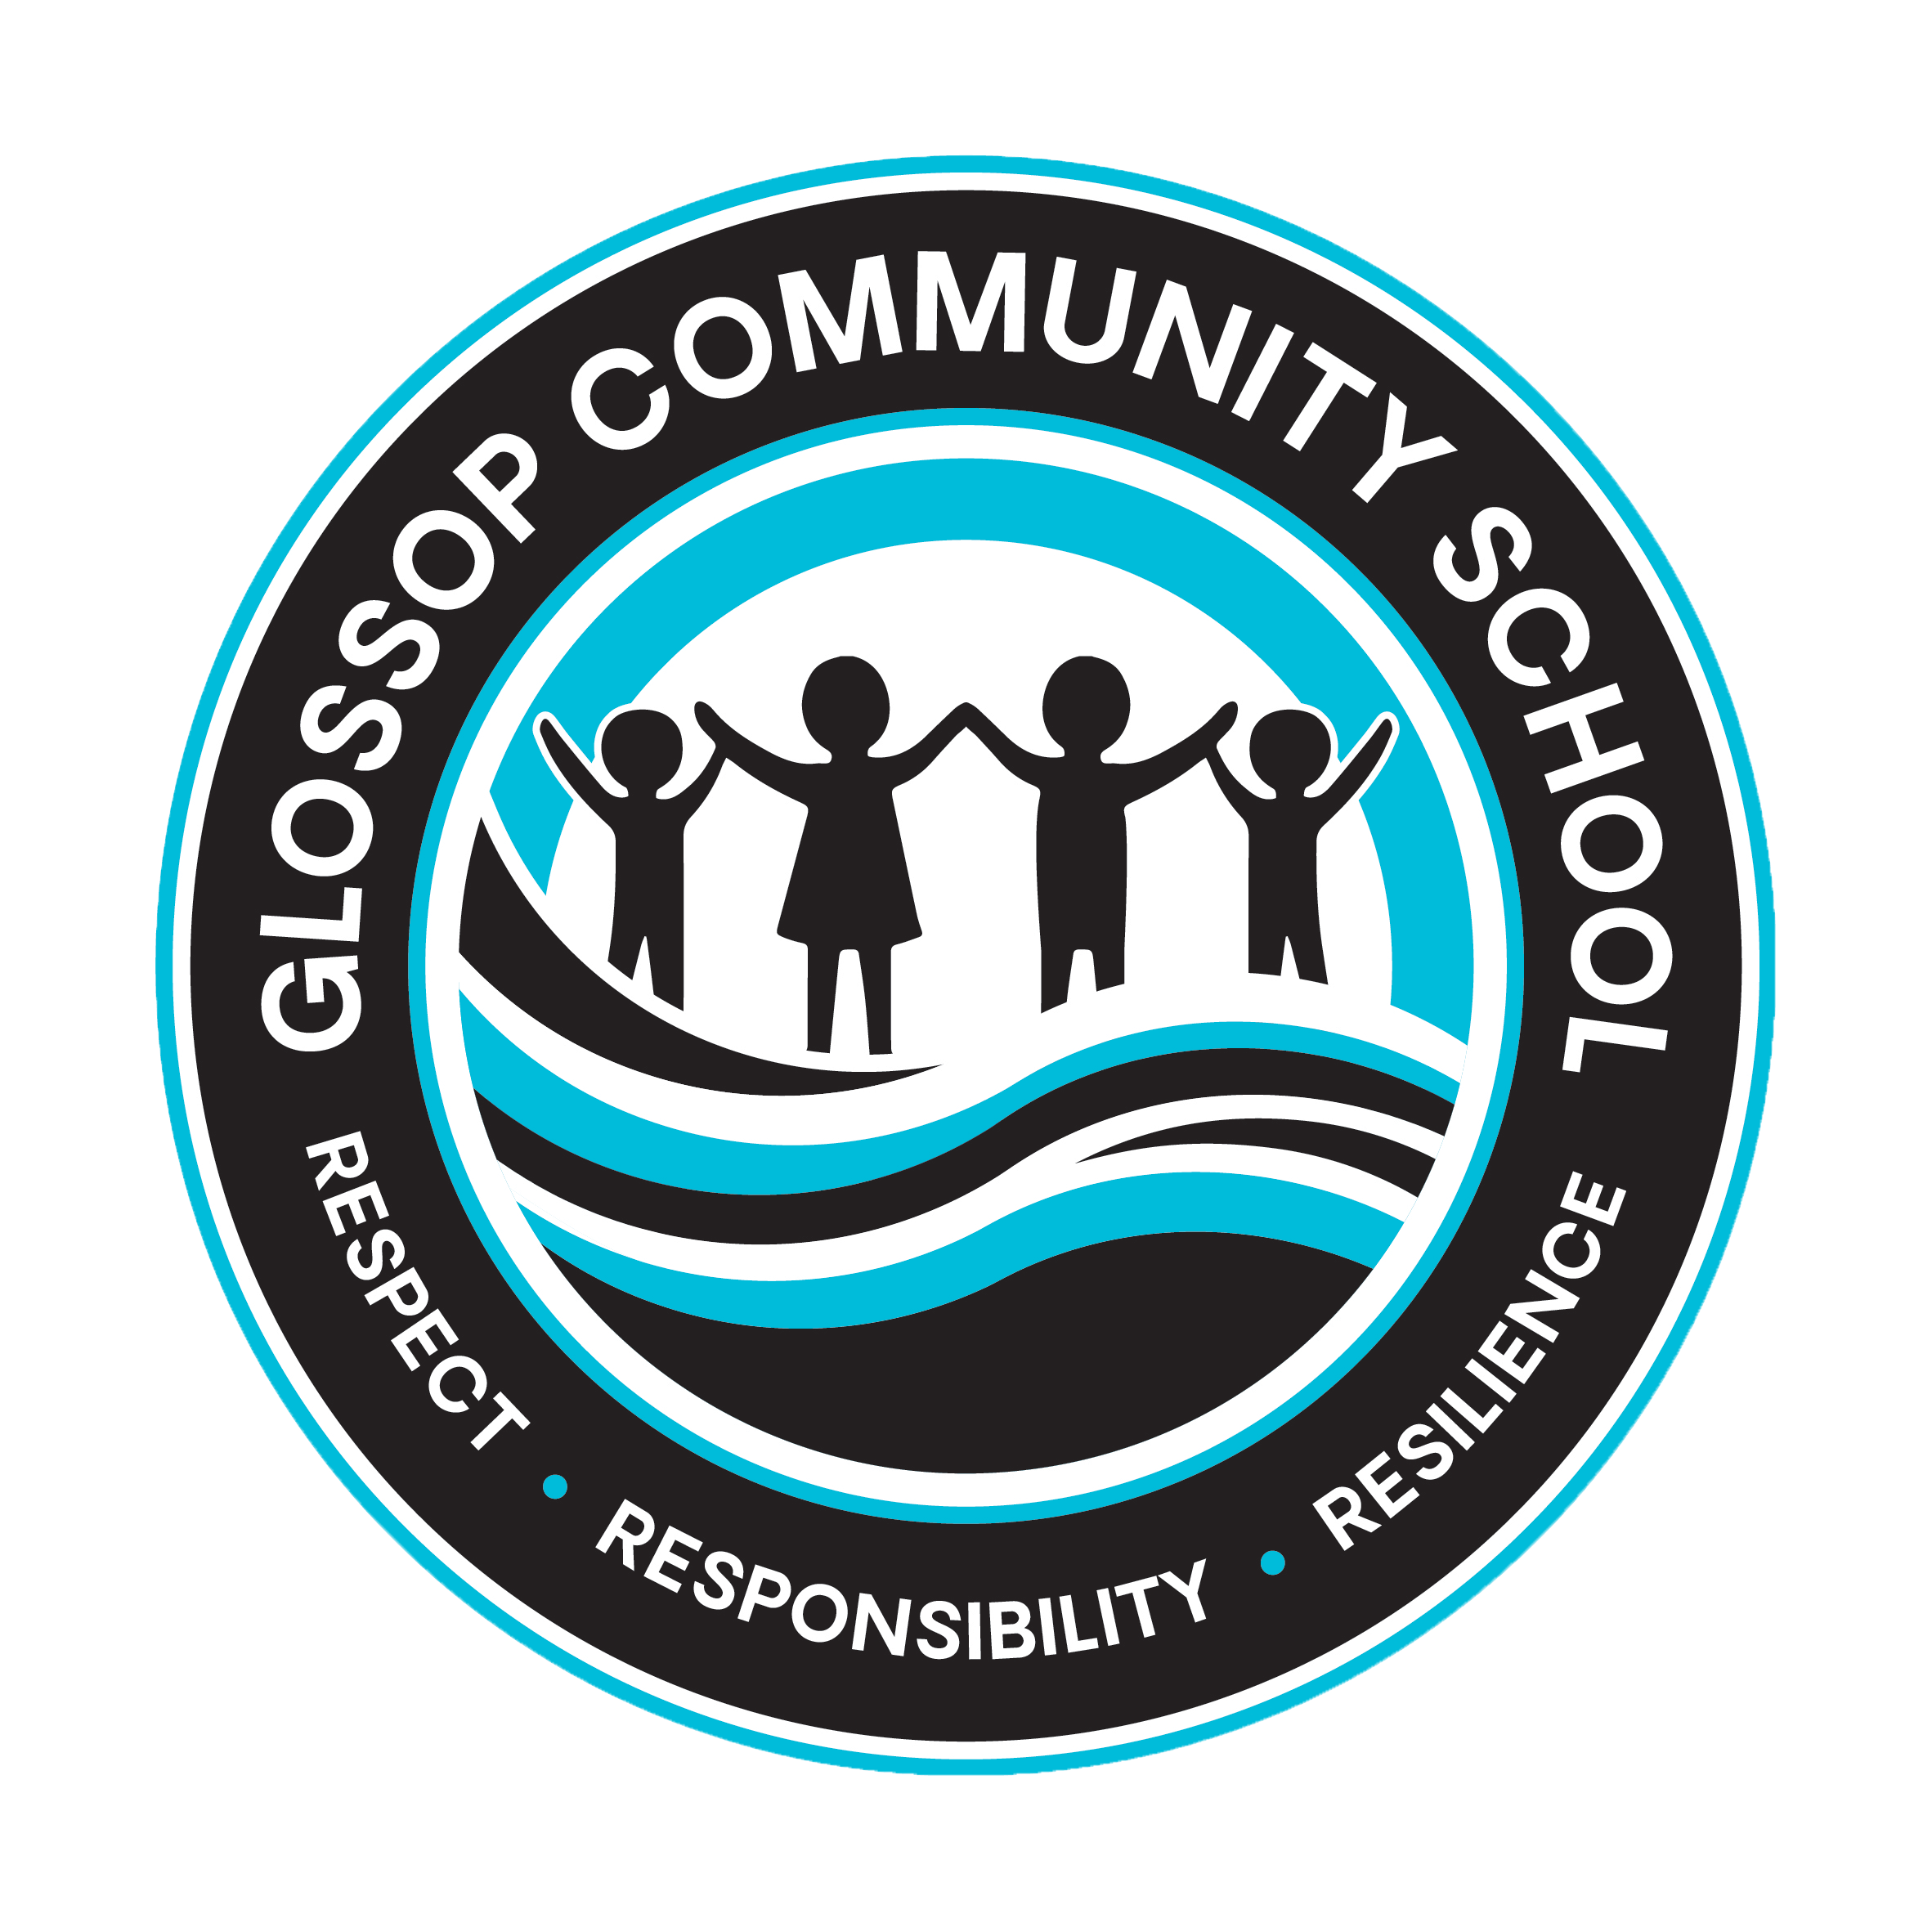 Glossop Community School